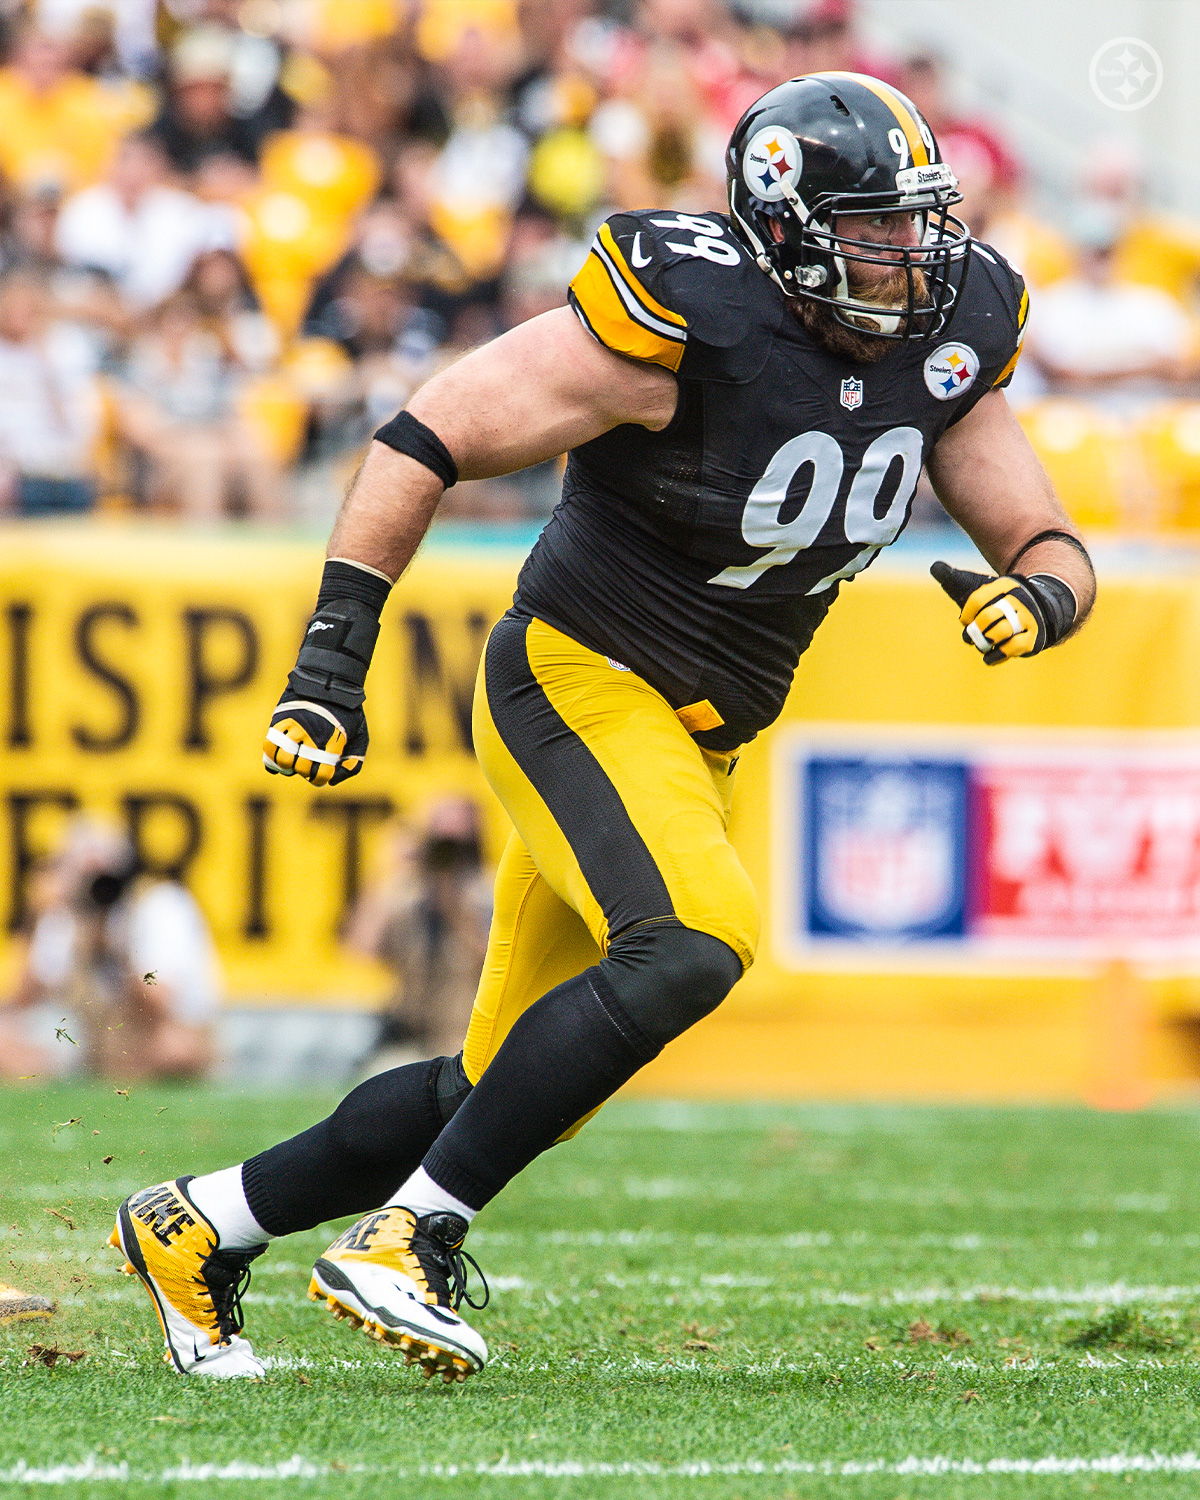 Casey Hampton Autographed Pittsburgh Steelers 8x10 Photo - BAS COA